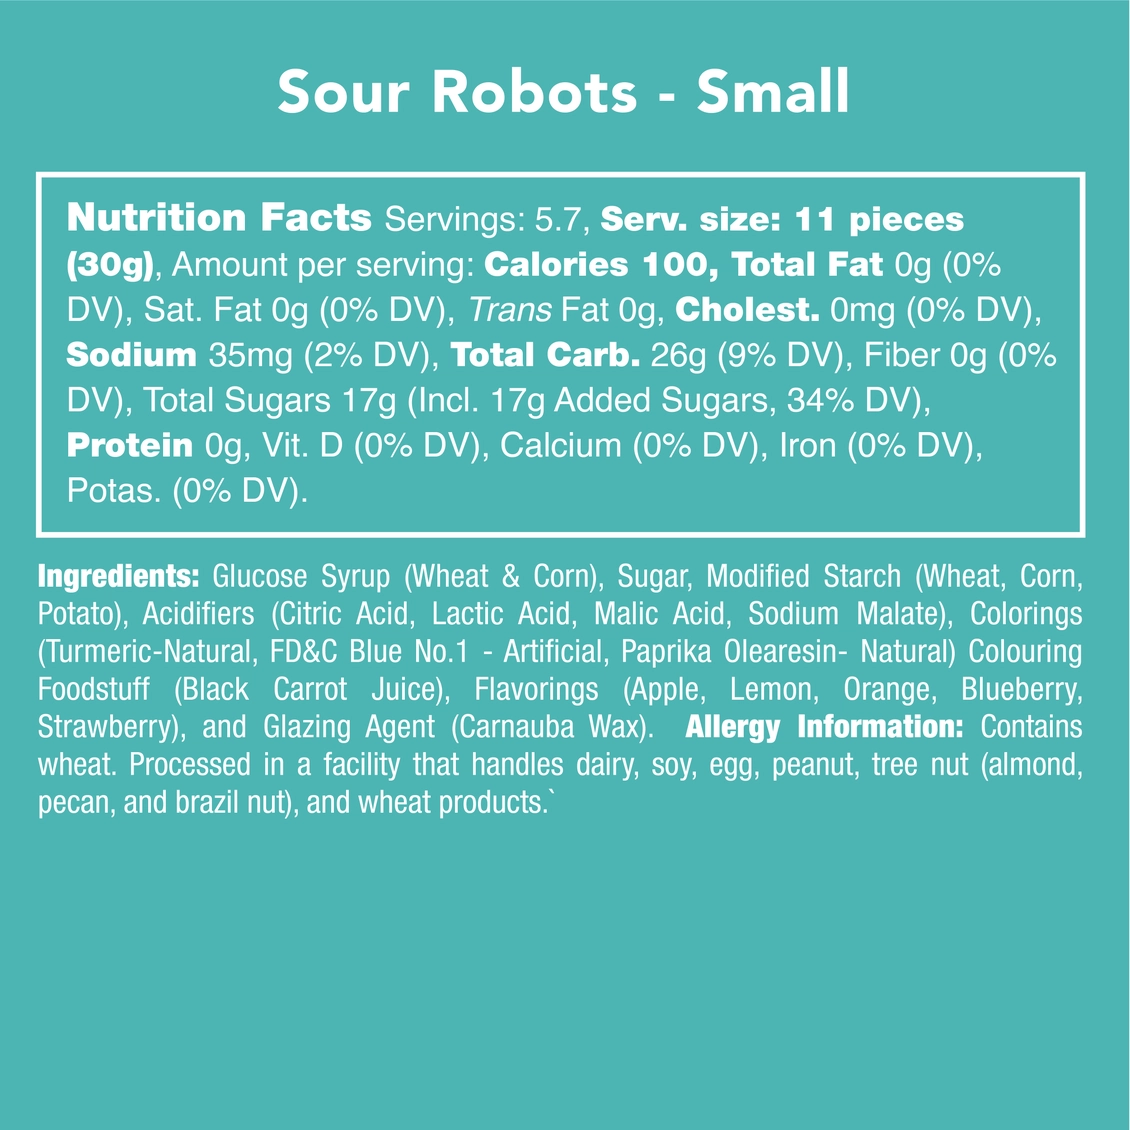 Sour Robots-Candy-Candy Club-Stella Violet Boutique in Arvada, Colorado